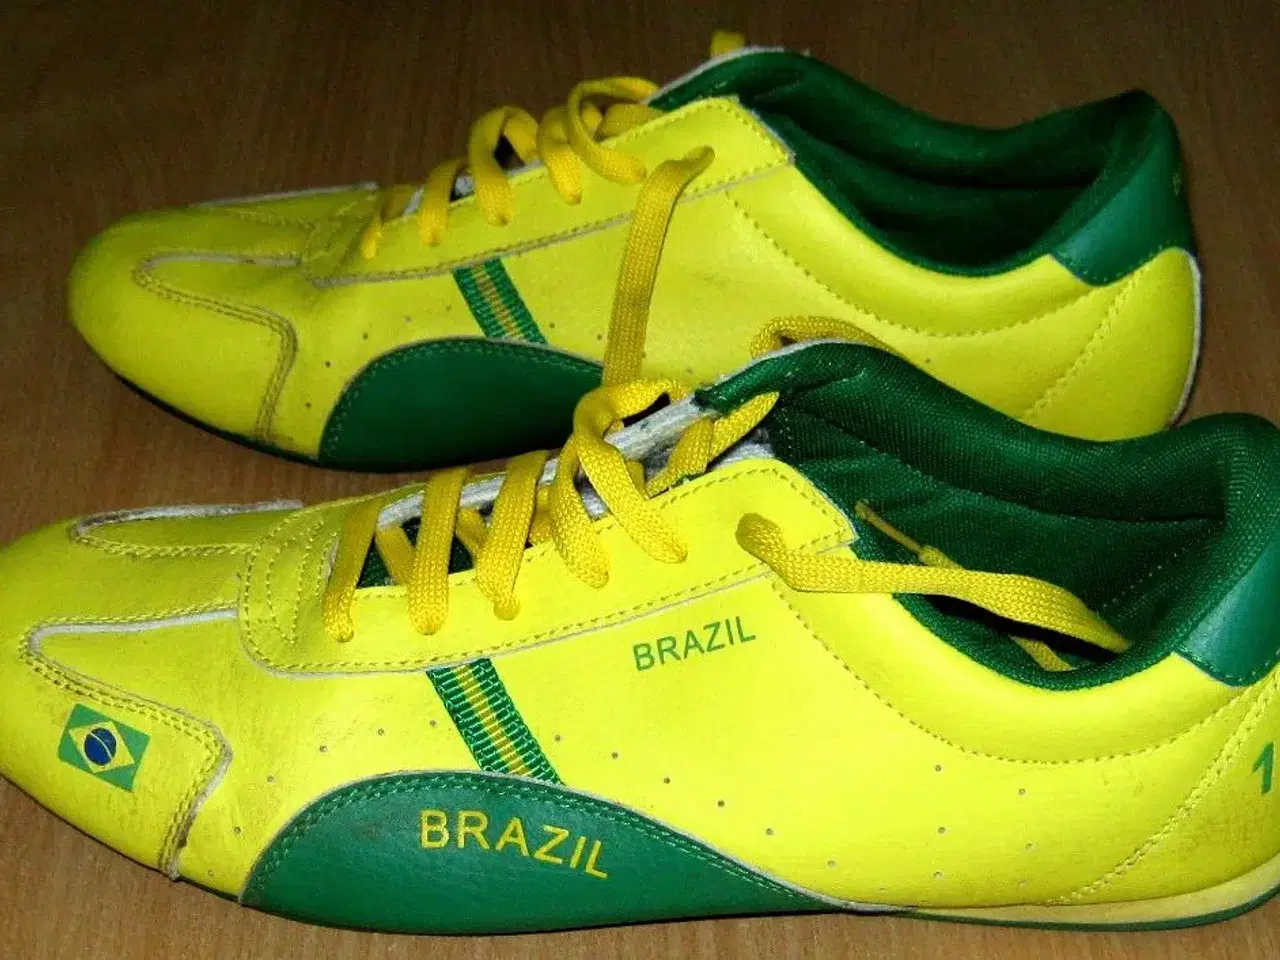 Billede 2 - Sportsko fra Brasilien - 43 